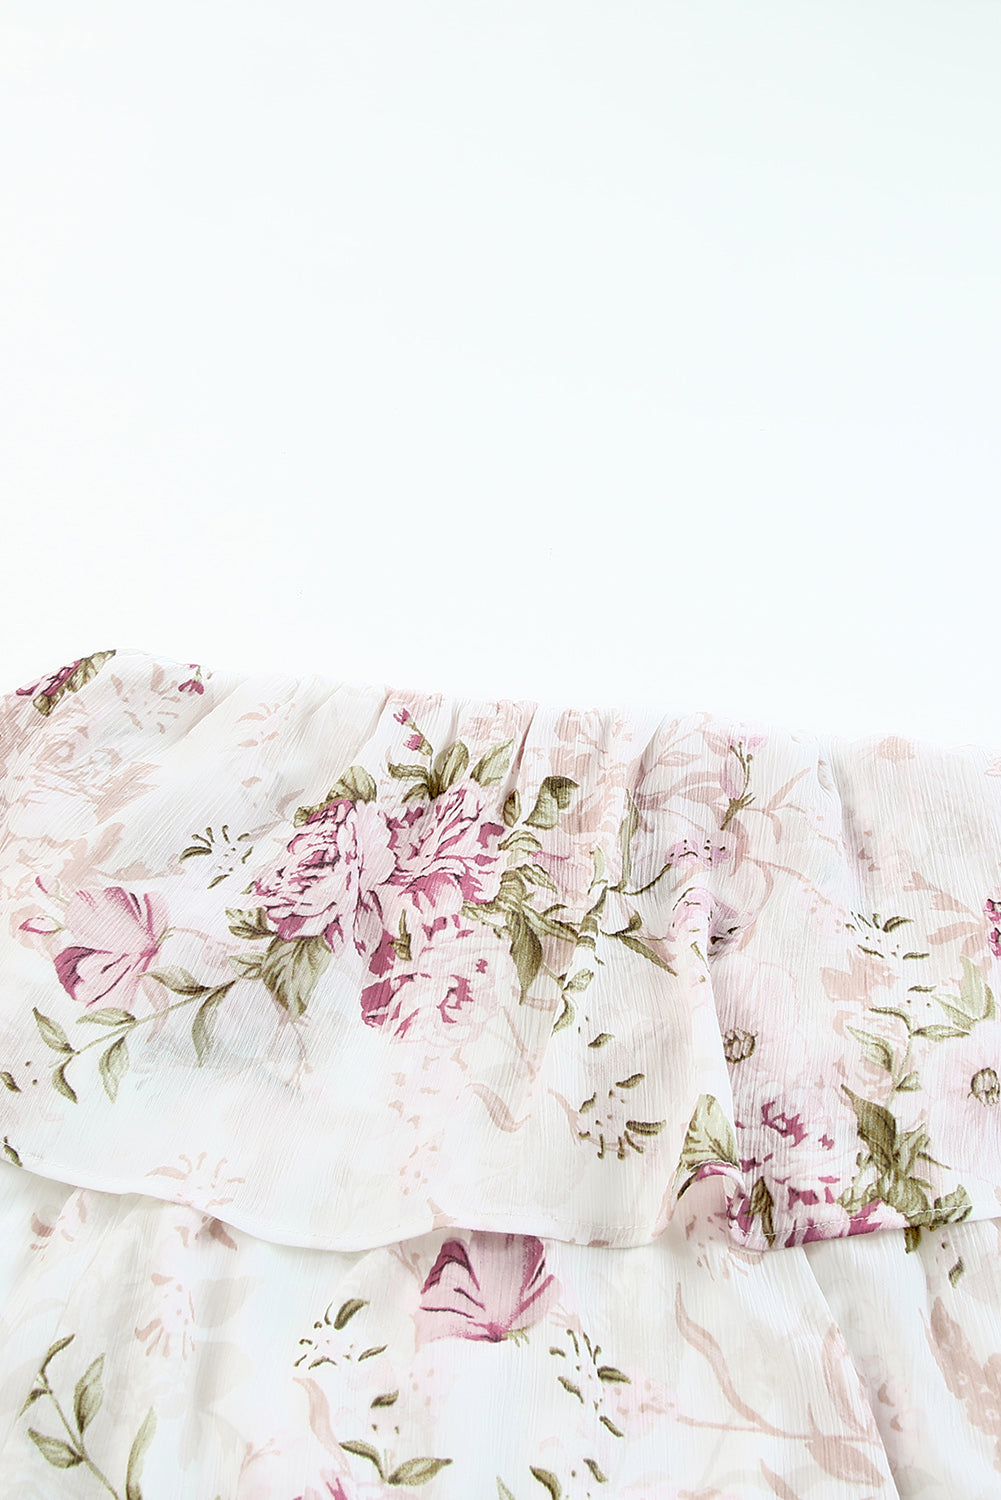 Pink Floral Print Strapless Tube Top Maxi Dress Maxi Dresses JT's Designer Fashion